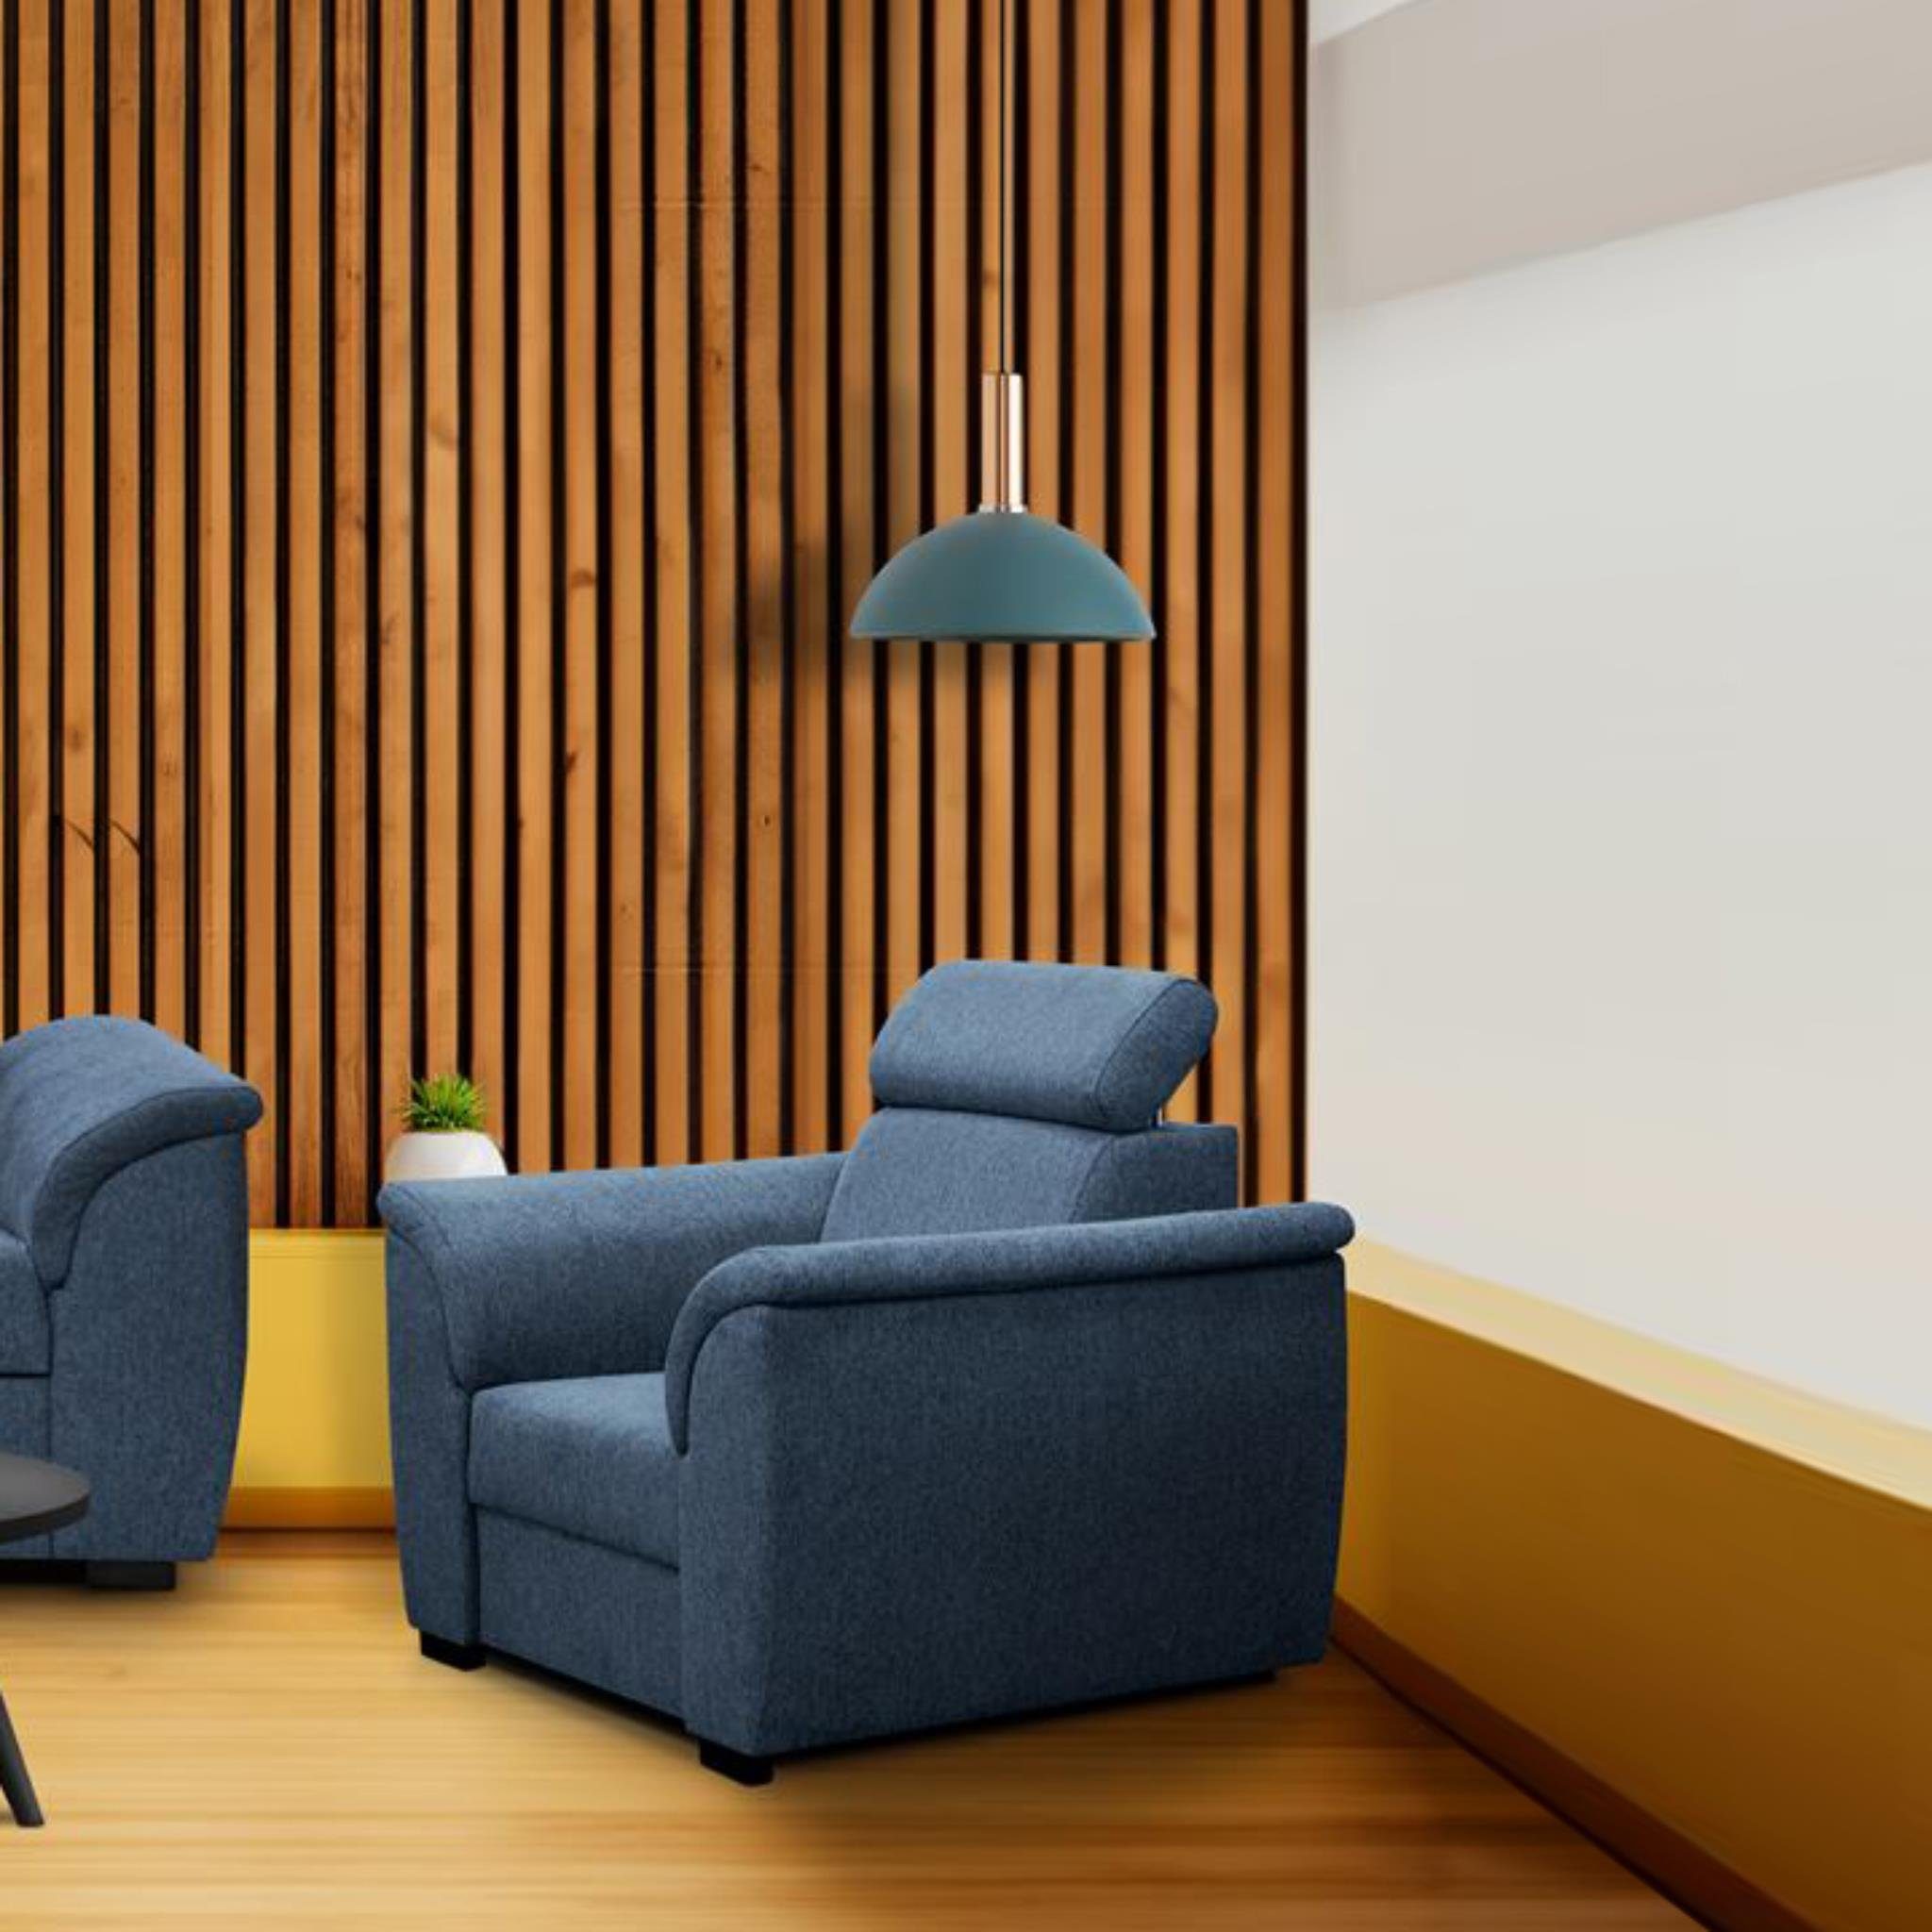 Blau verstellbare Kopfstütze Relaxsessel Sessel Polstersessel 12) mit mit Madera Wellenfedern), (modern stilvoll (matana Beautysofa Lounge